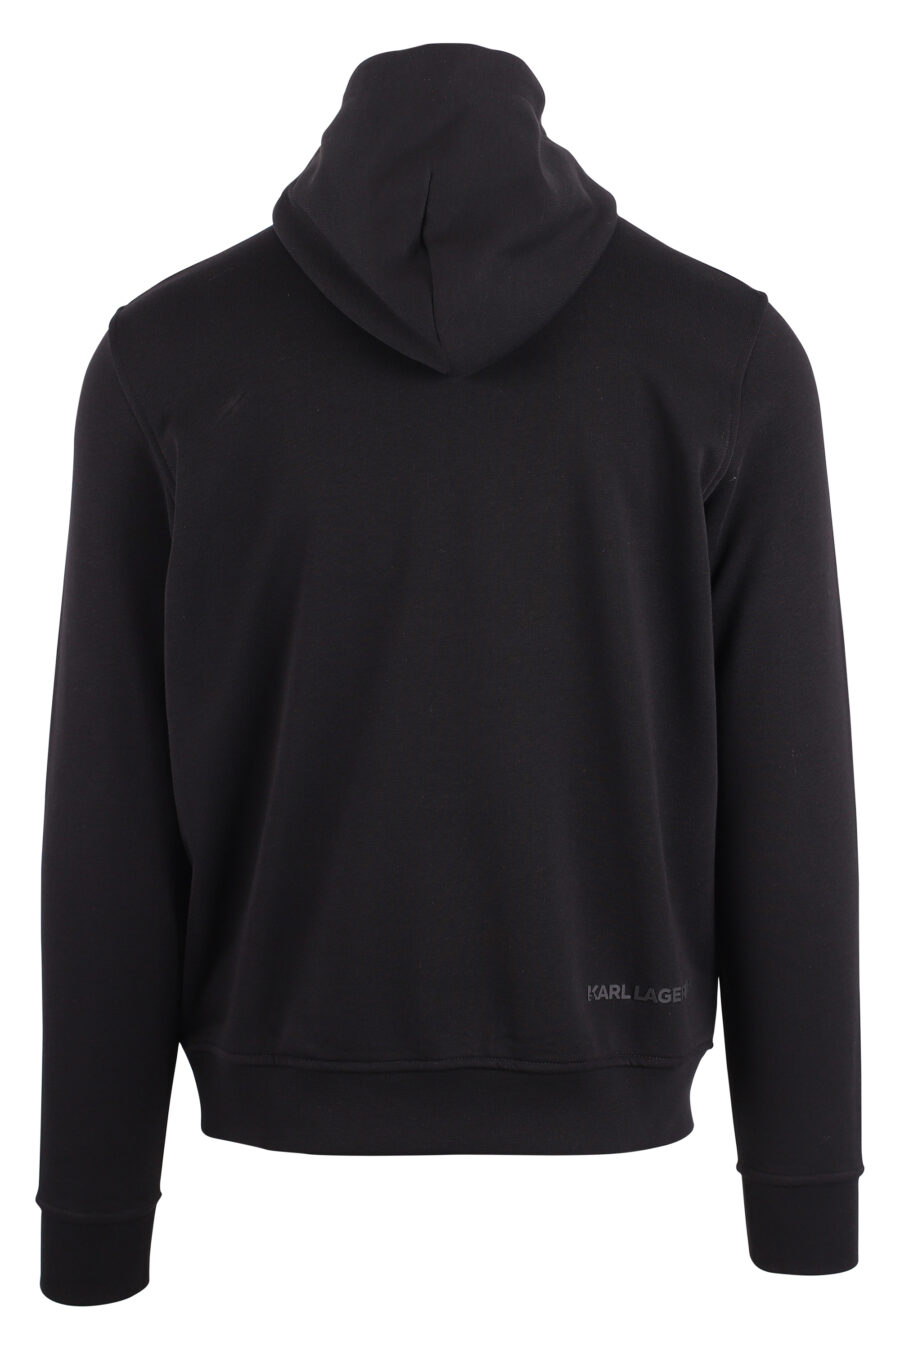 Black sweatshirt with hood and "karl" logo in white silhouette - IMG 9420